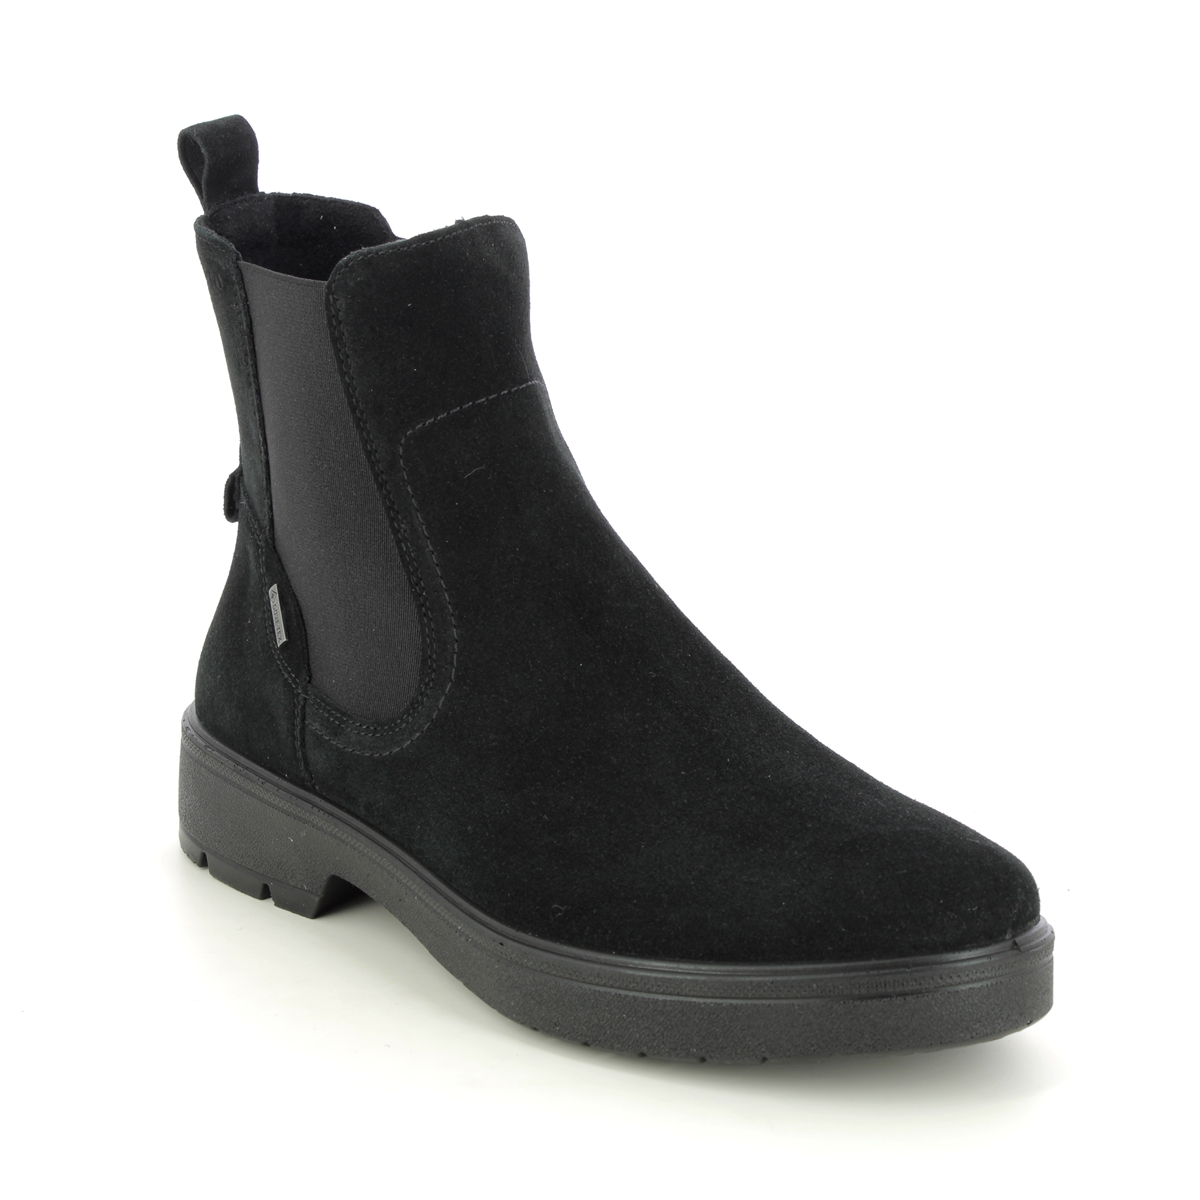 Legero Mystic Chelsea Gtx Black Suede Womens Chelsea Boots 2000191-0000 In Size 4.5 In Plain Black Suede